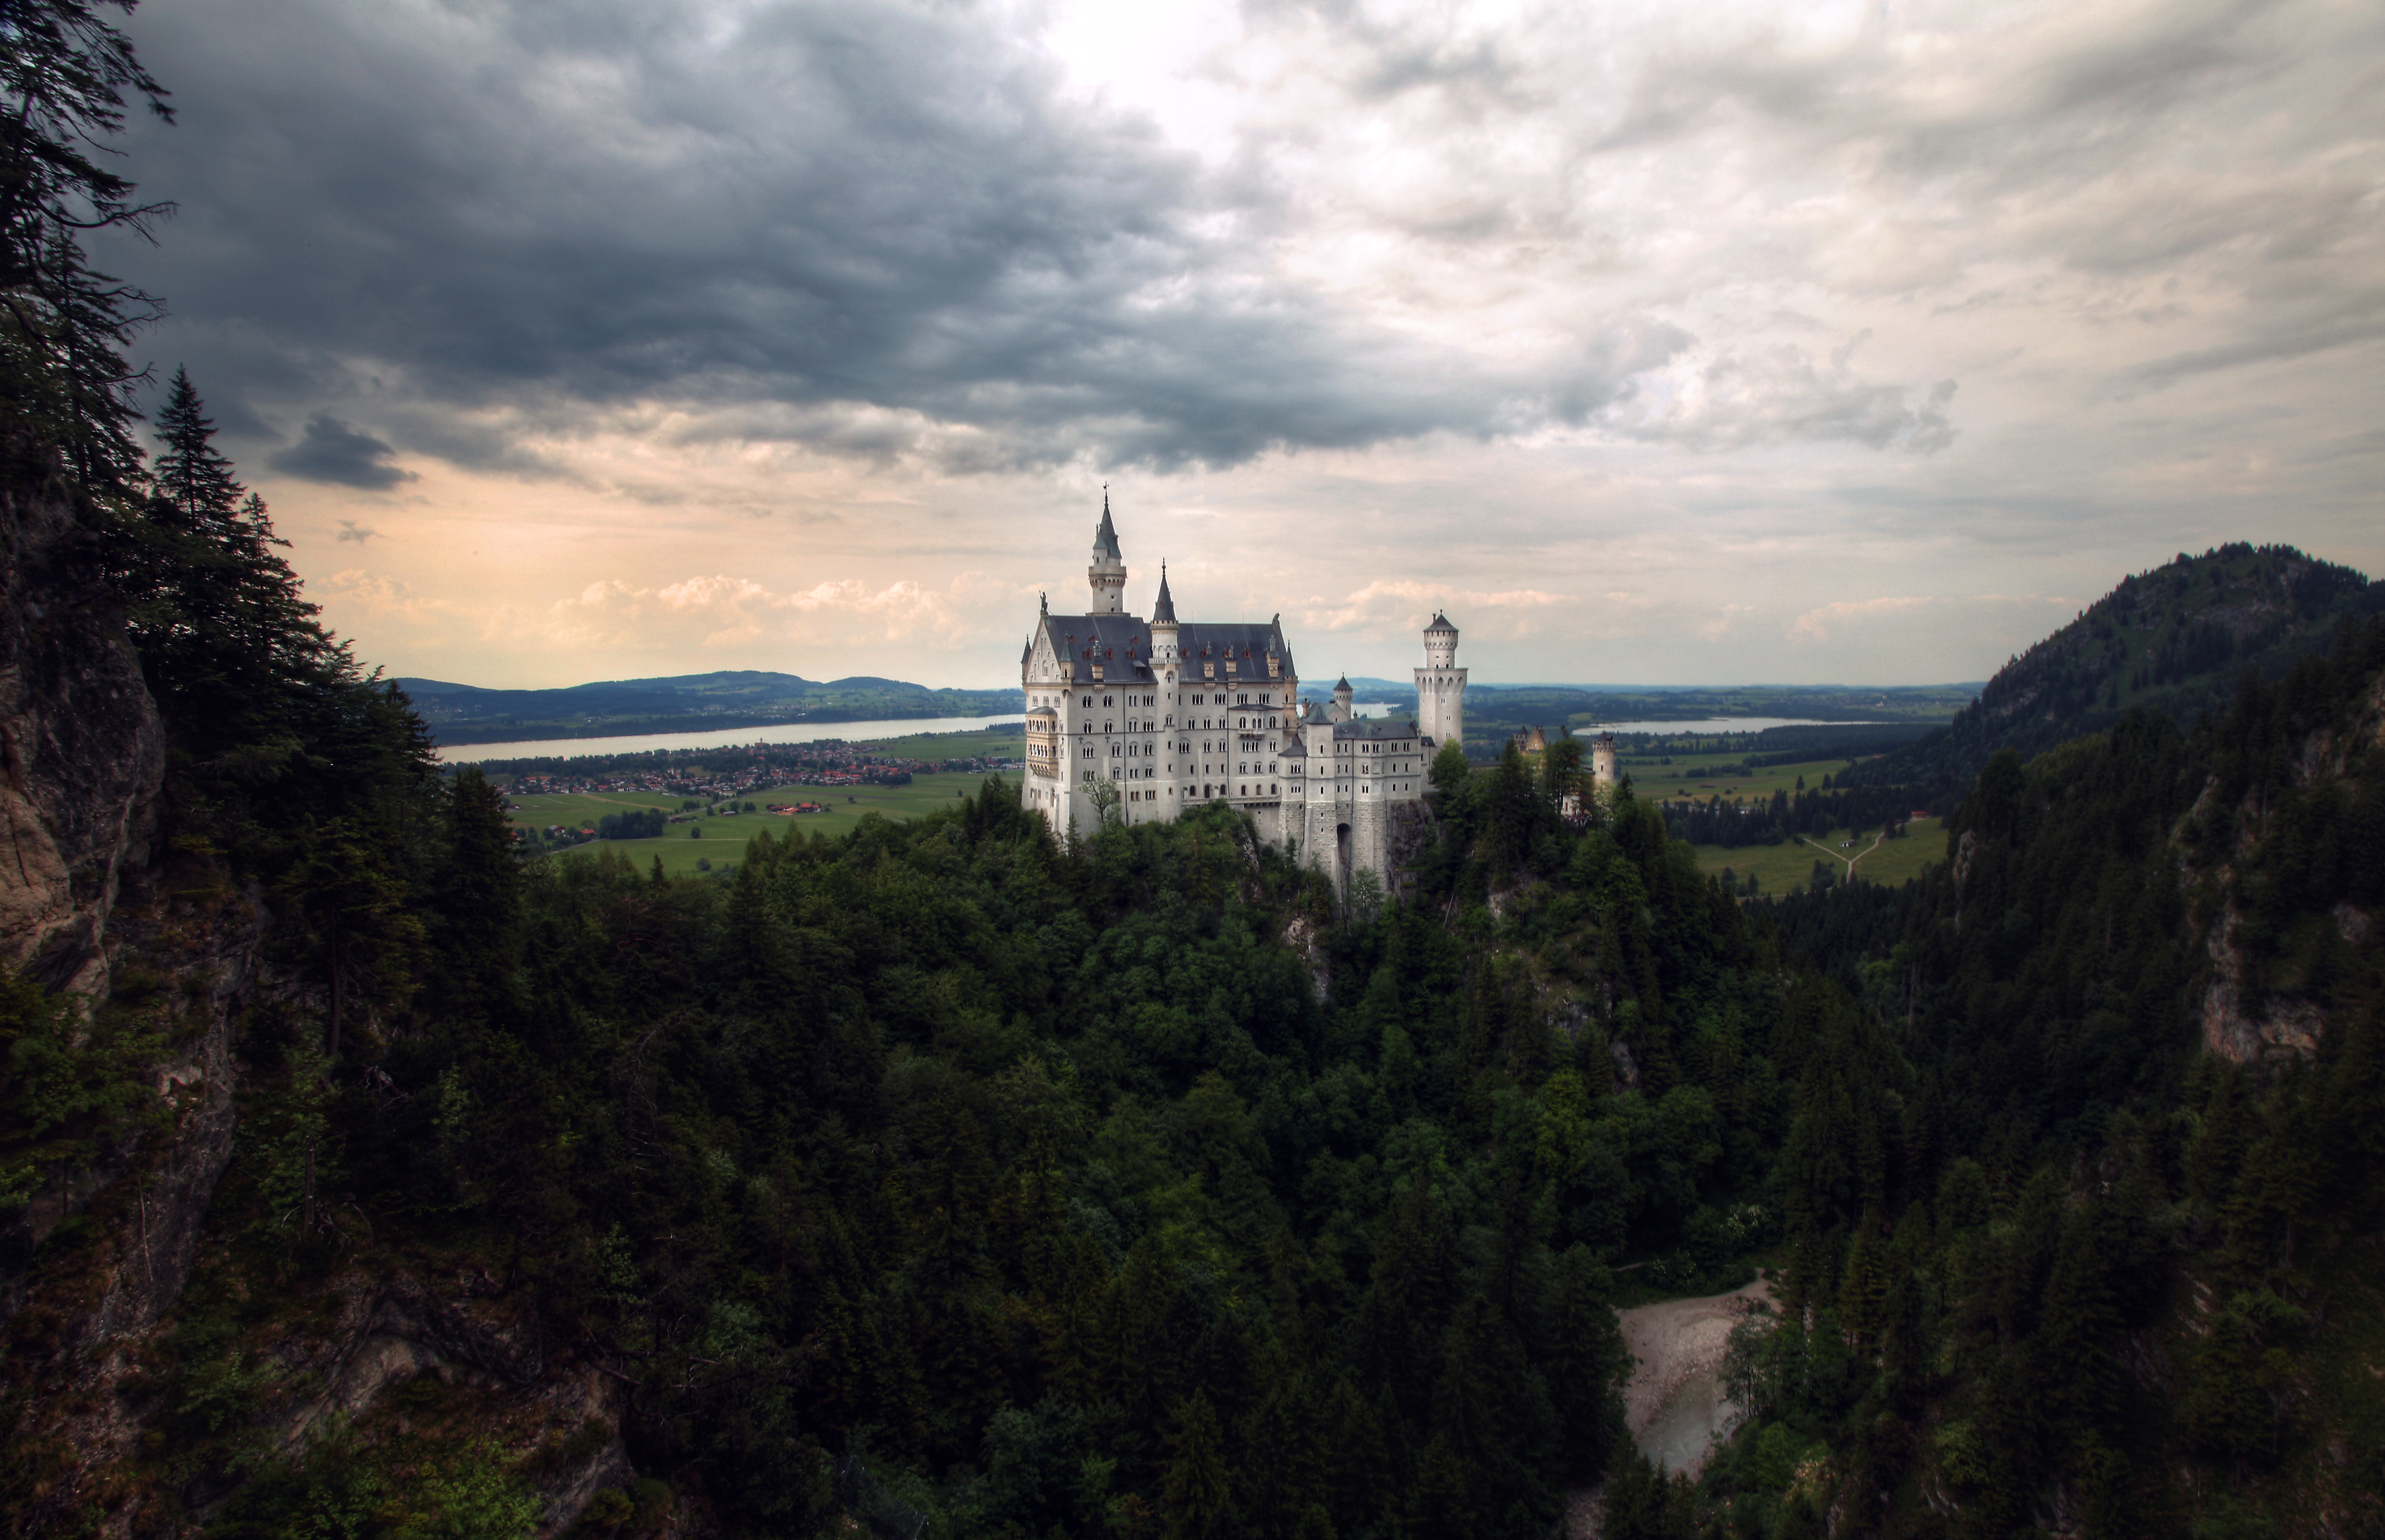 man made, neuschwanstein castle, bavaria, cloud, germany, landscape, castles